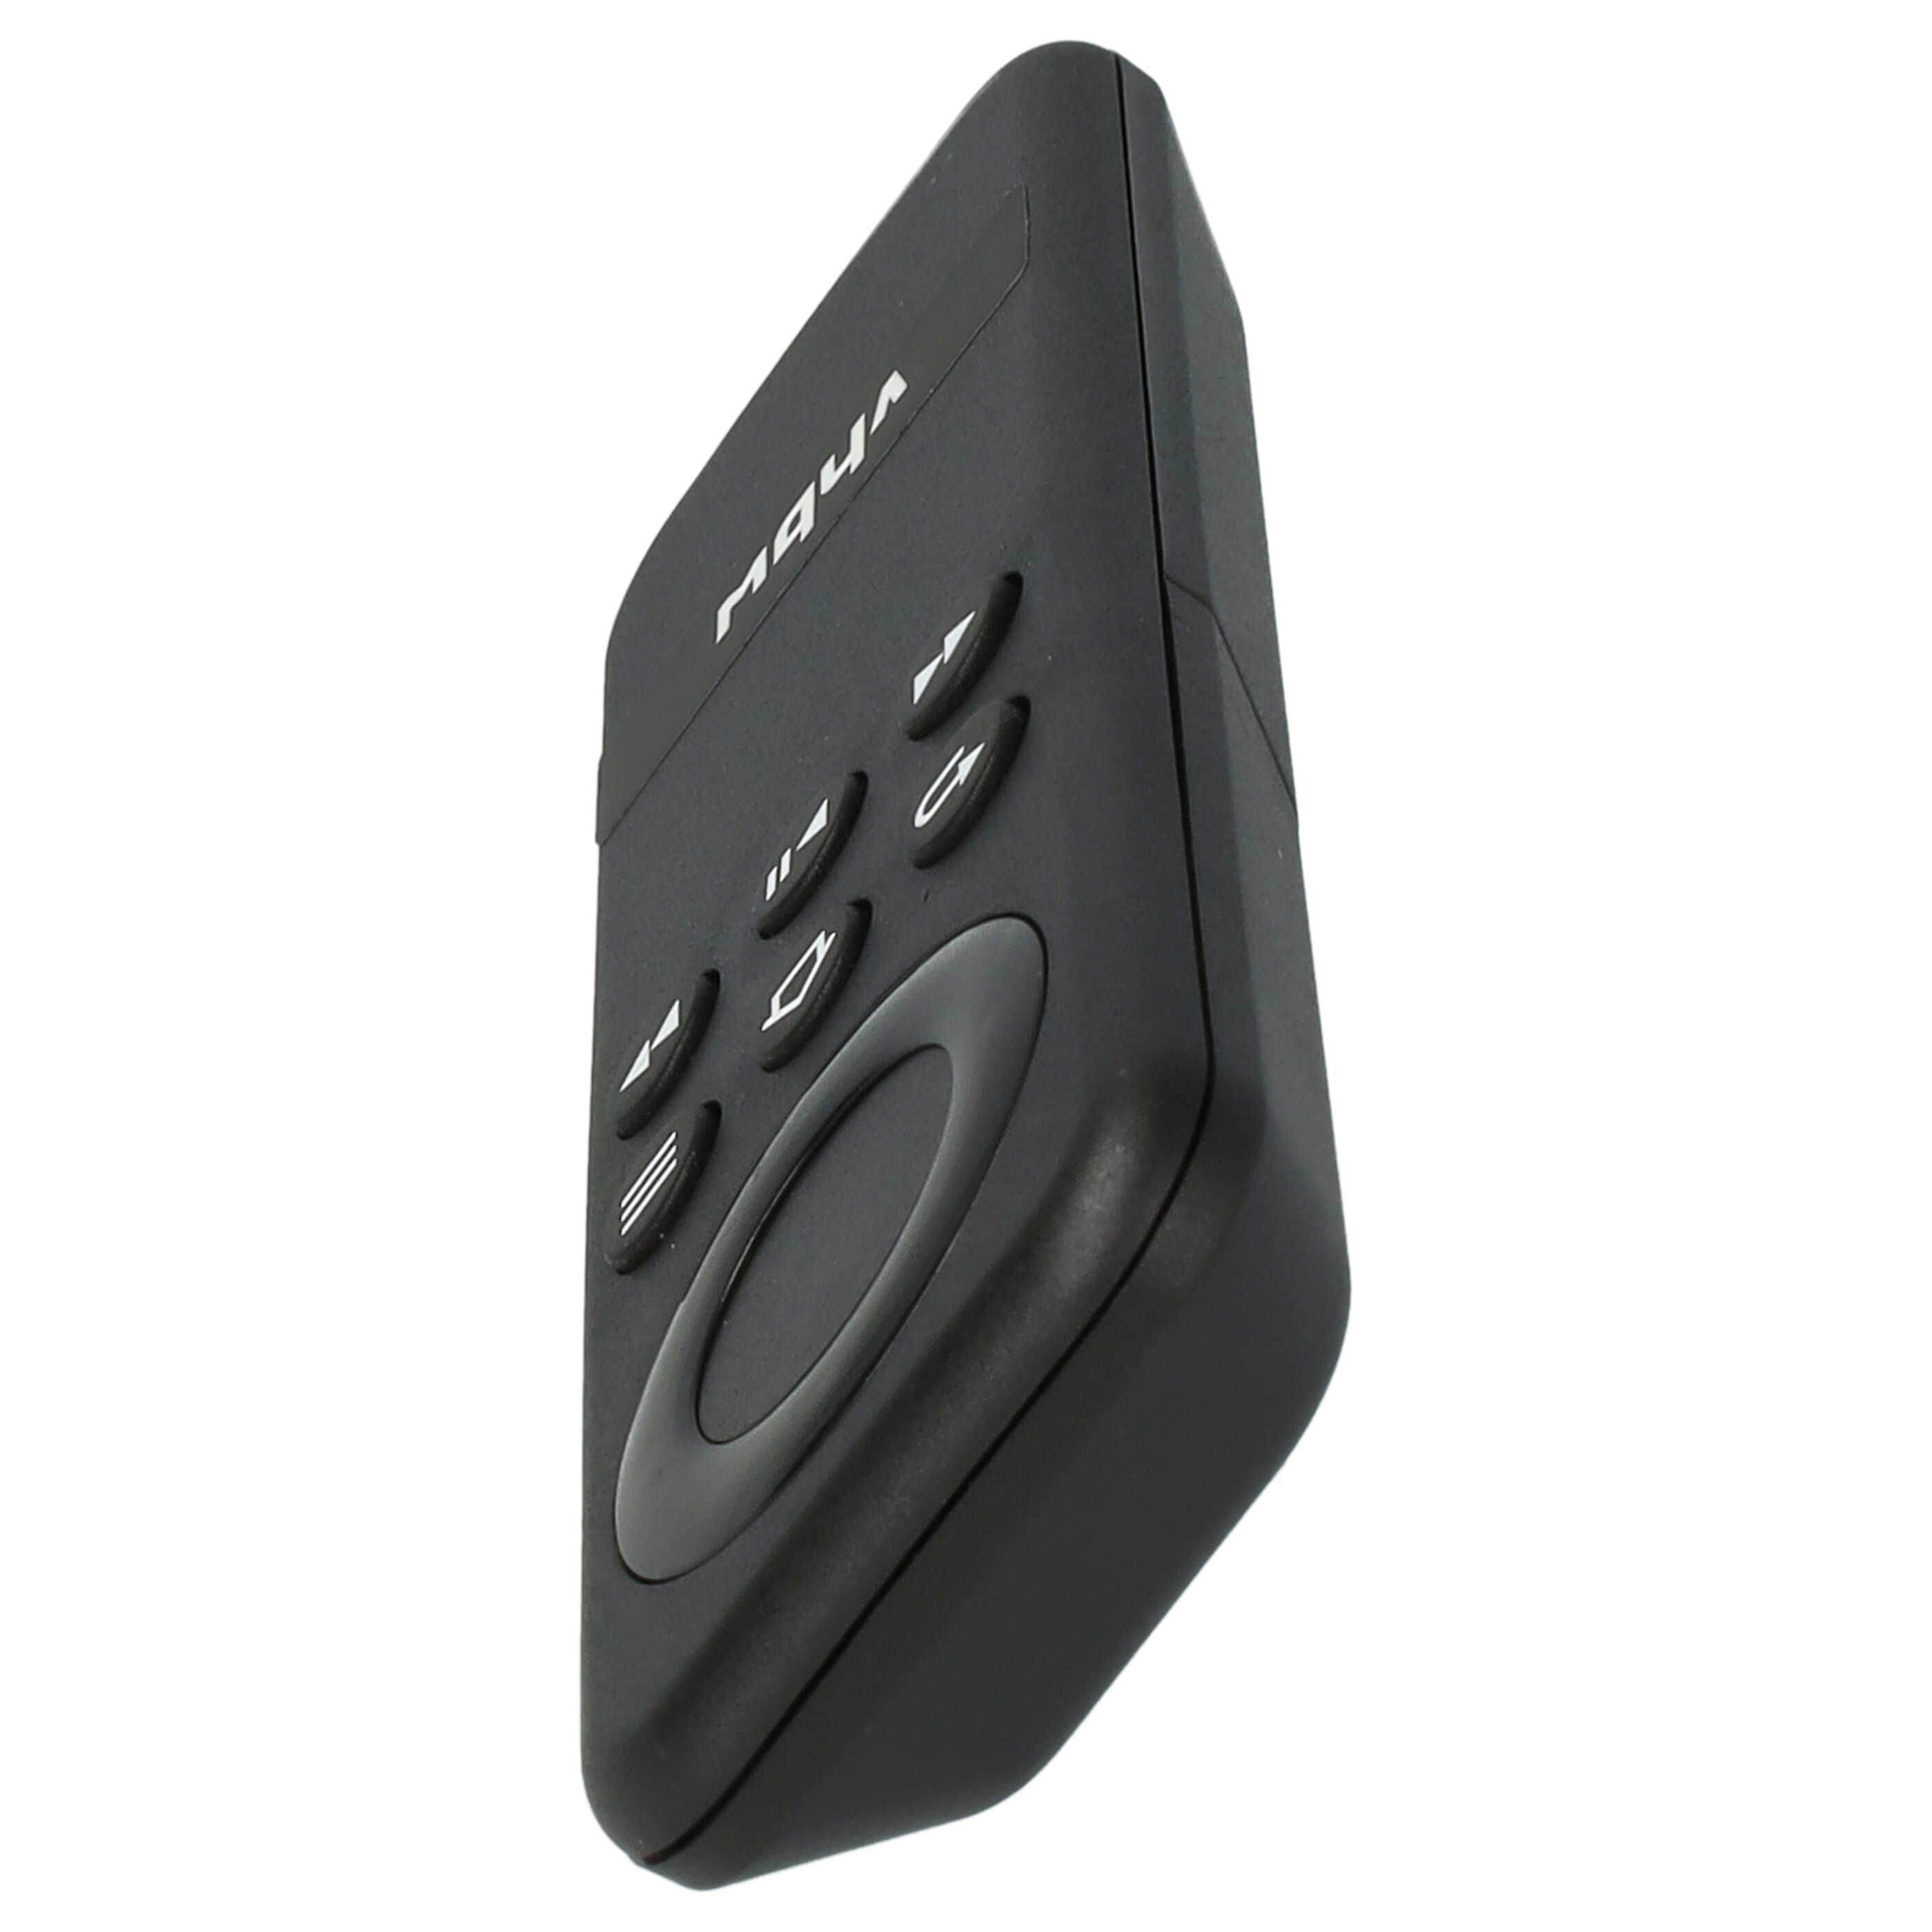 Remote Control replaces Amazon CV98LM for Amazon Streaming Box, Internet-TV Box